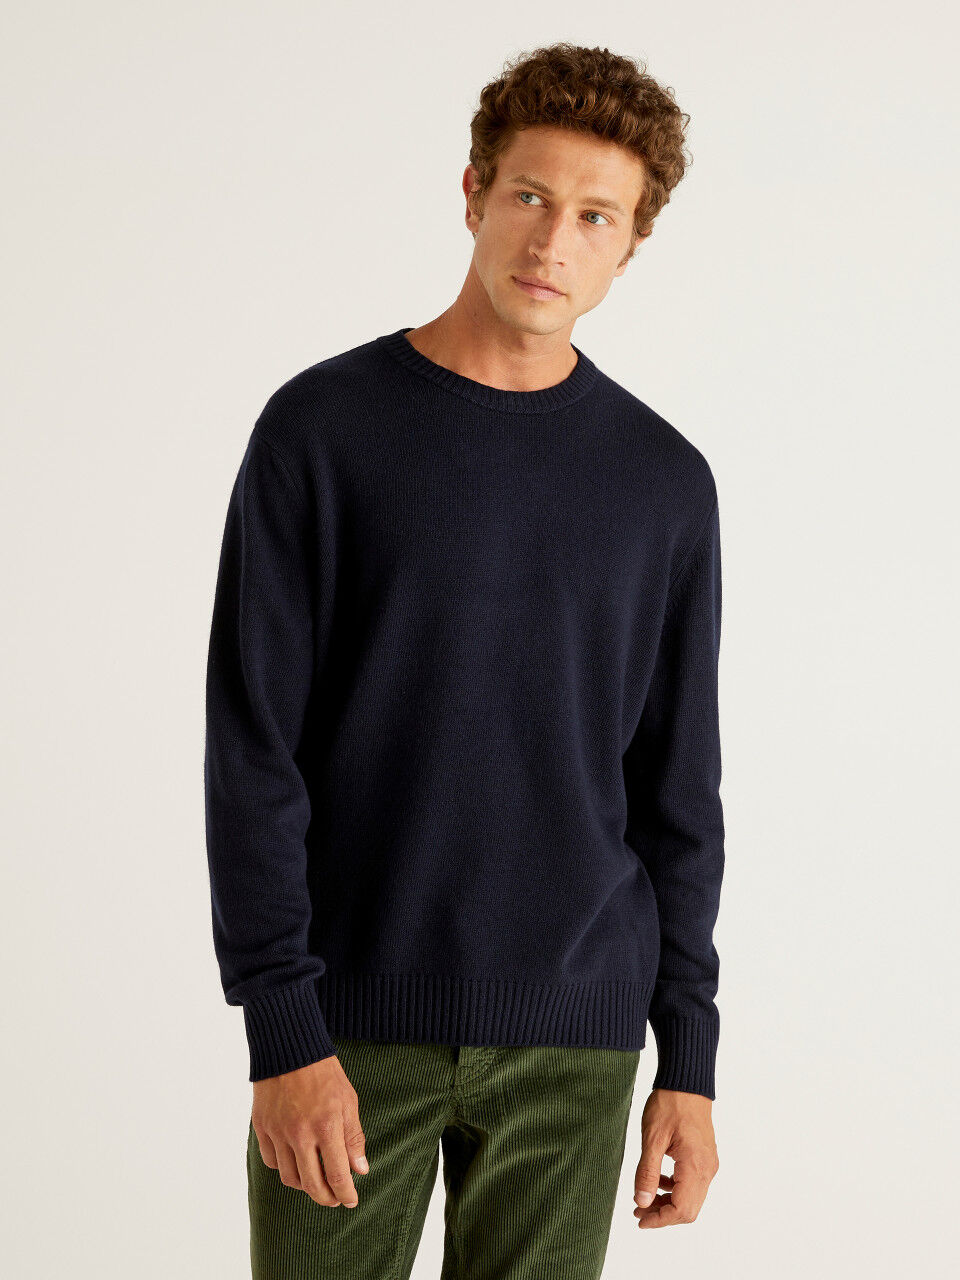 intersección Continuamente Ligadura Men's Cashmere Sweaters New Collection 2022 | Benetton